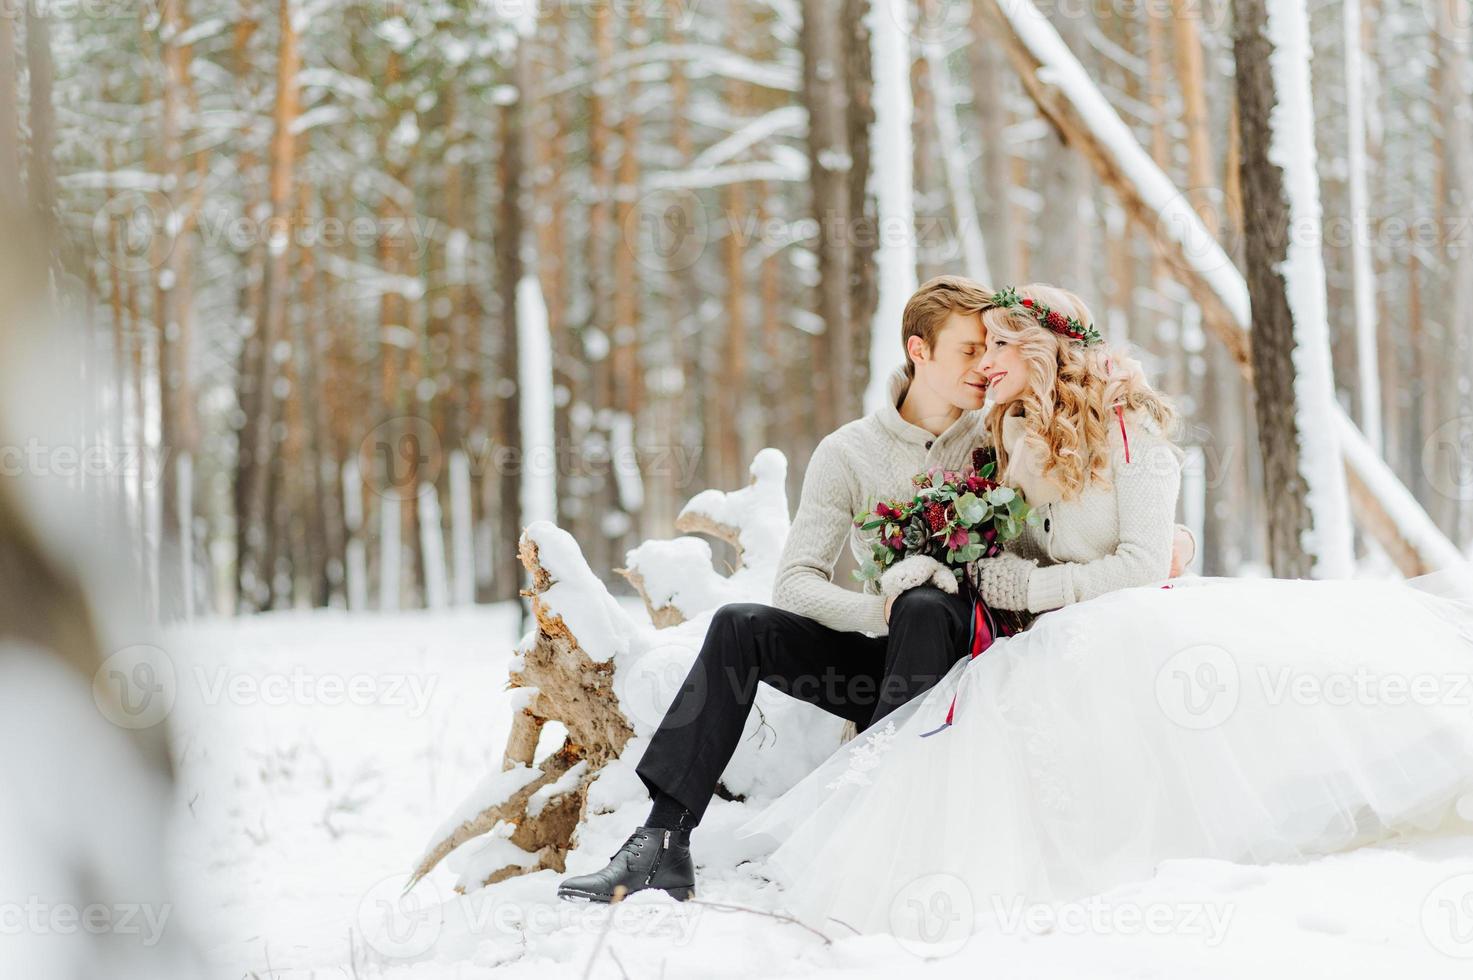 vinterbröllopsfotografering i naturen foto